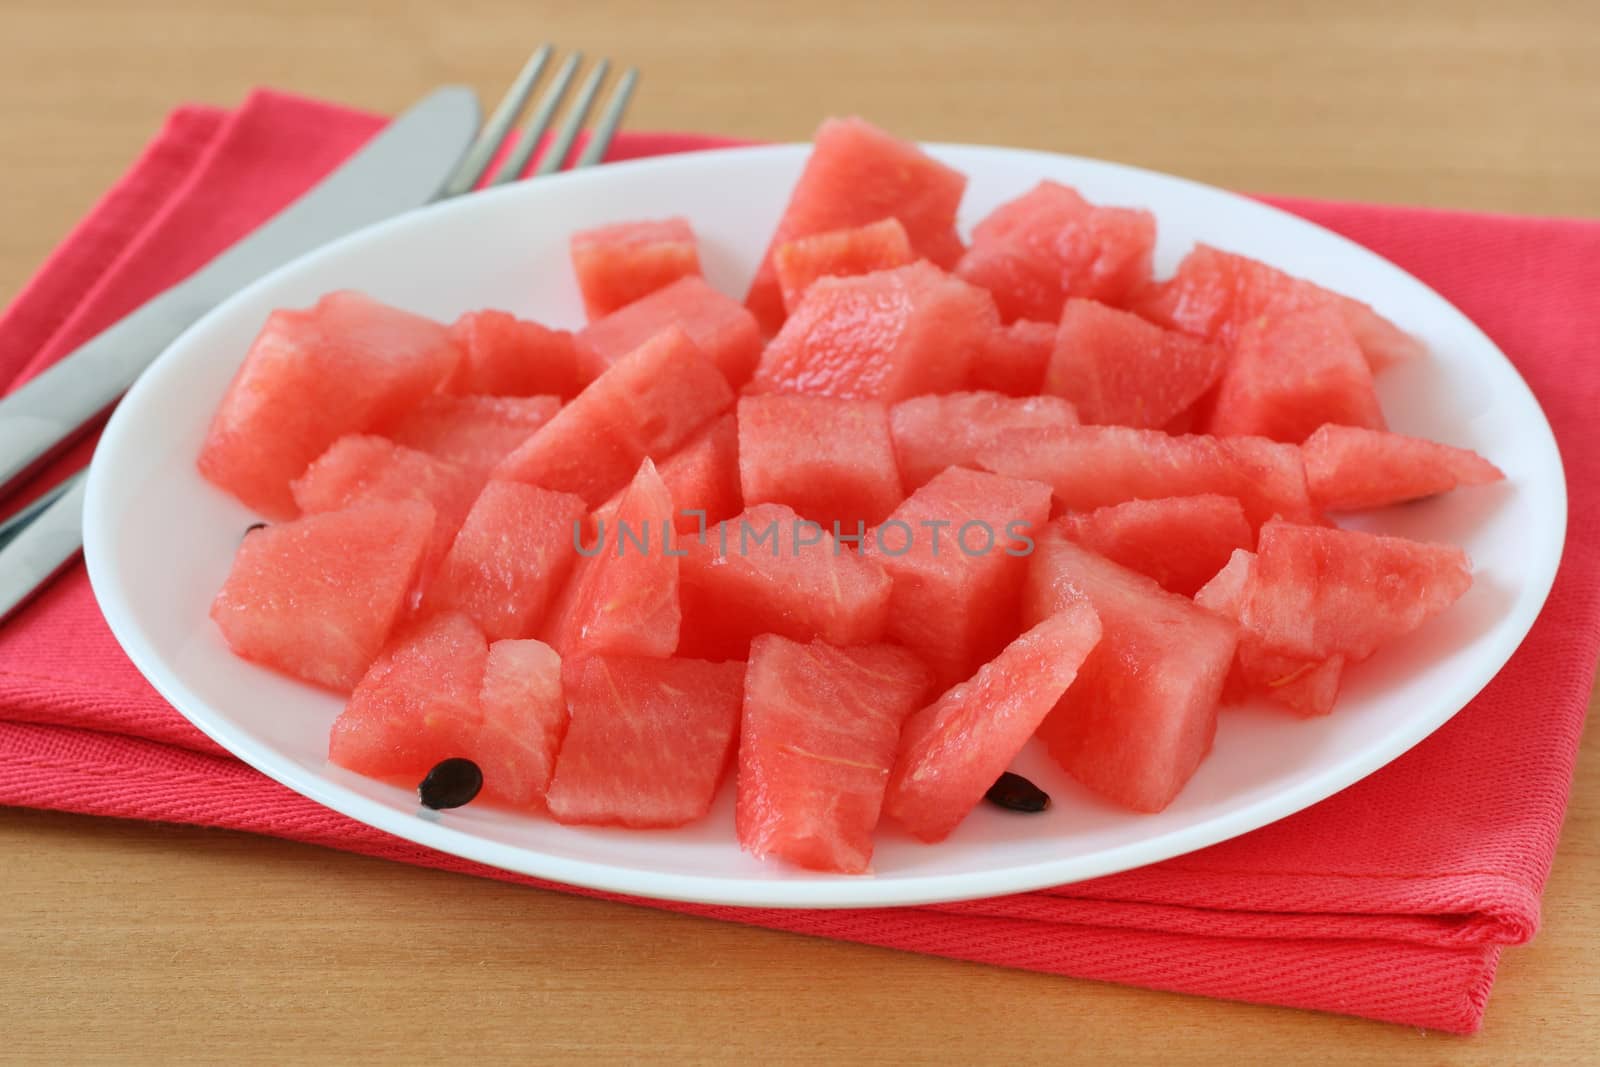 watermelon on the plate by nataliamylova